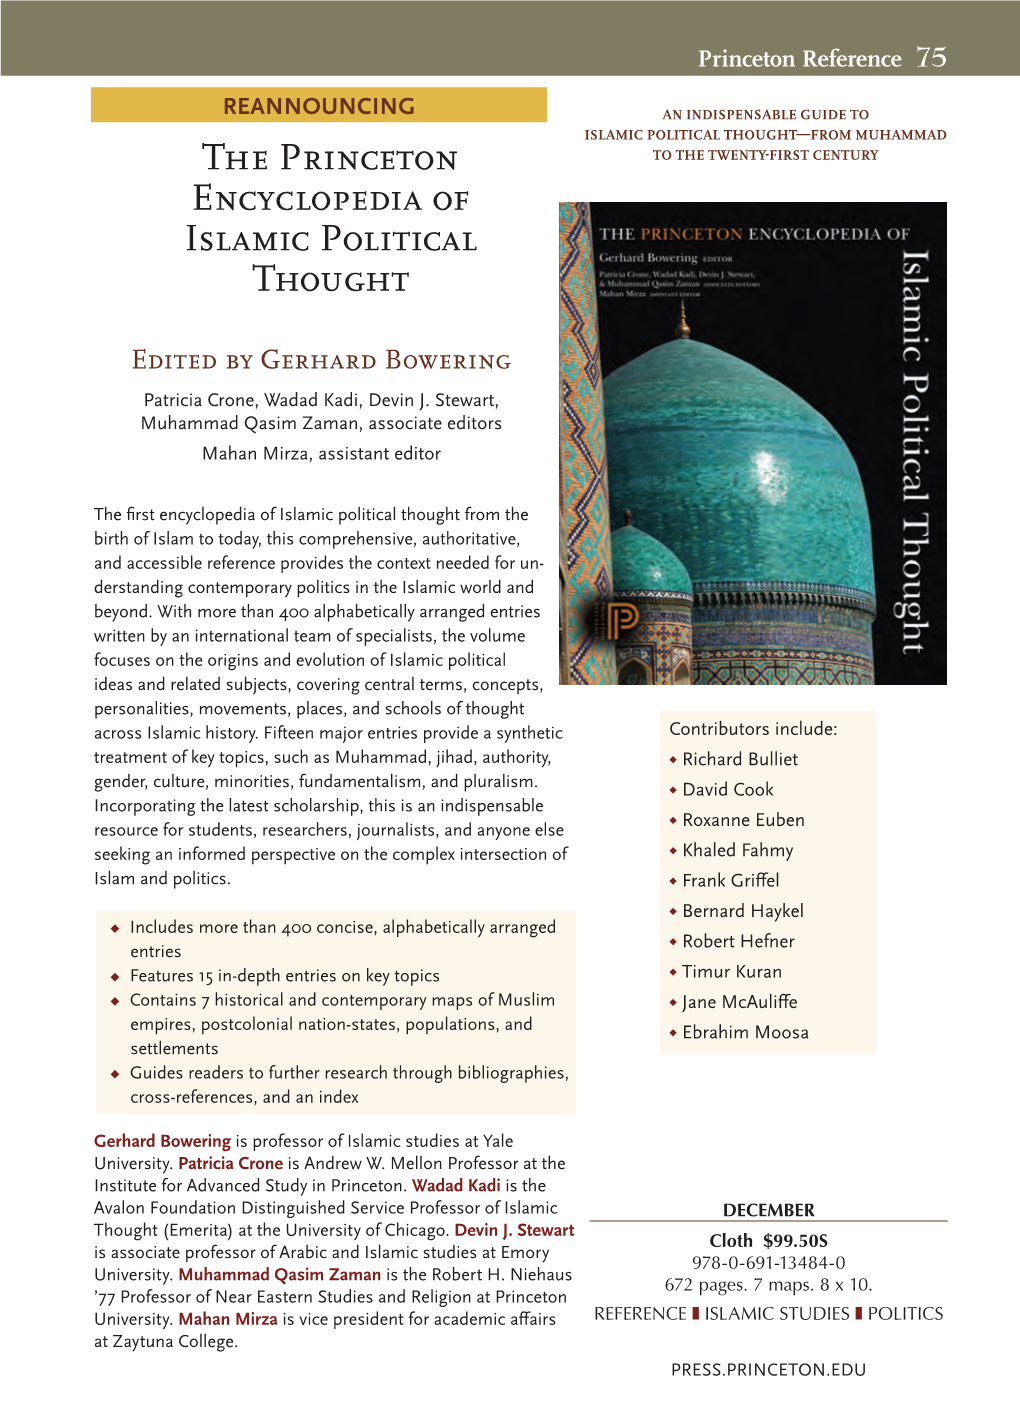 The Princeton Encyclopedia of Islamic